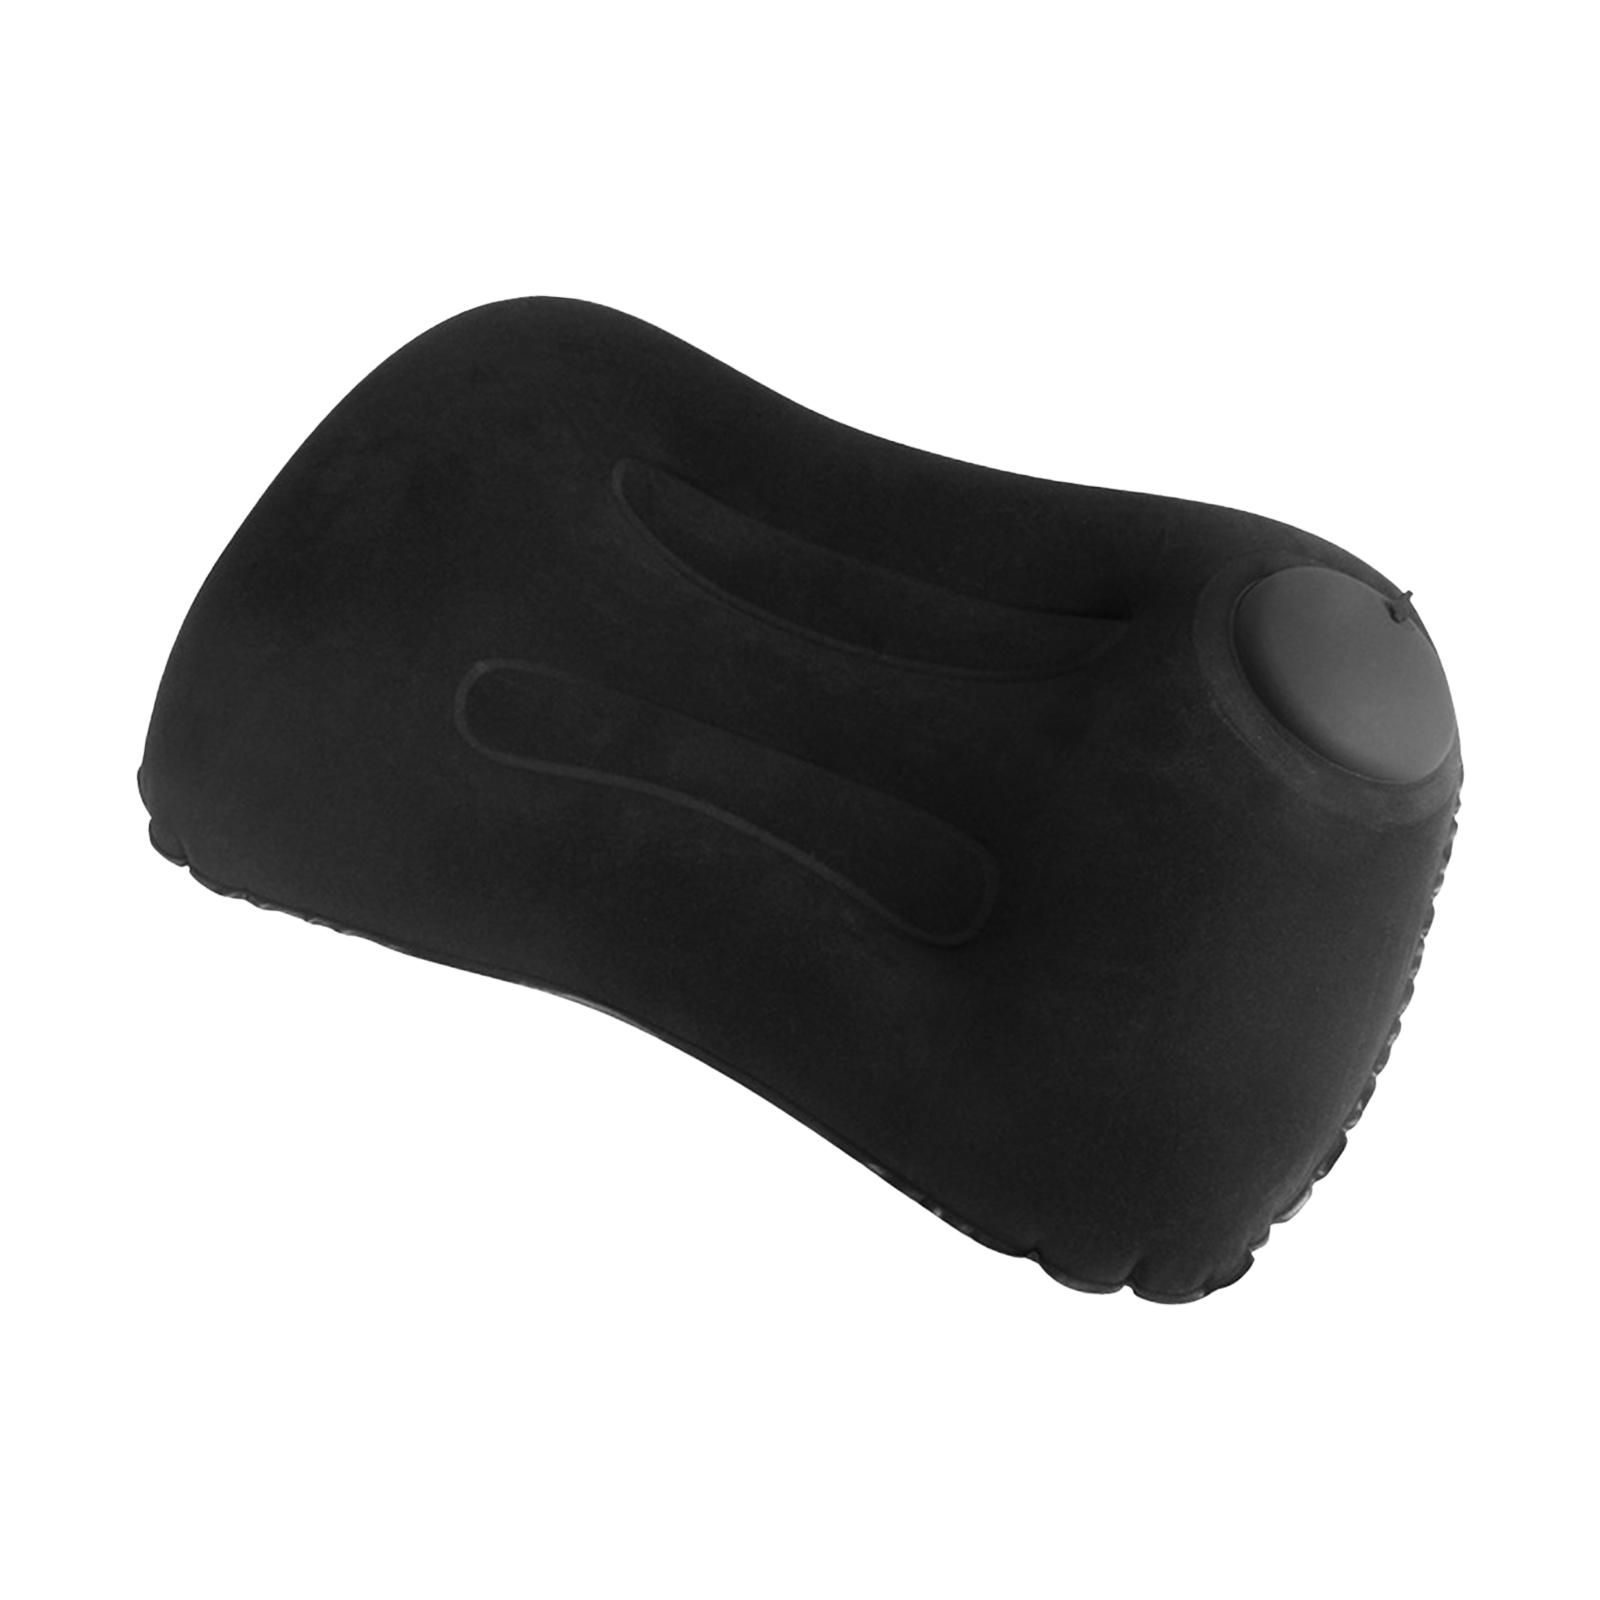 Travel Pillow Ergonomic Comfortable Foldable for Carry on Backpacking Office black Rectangular